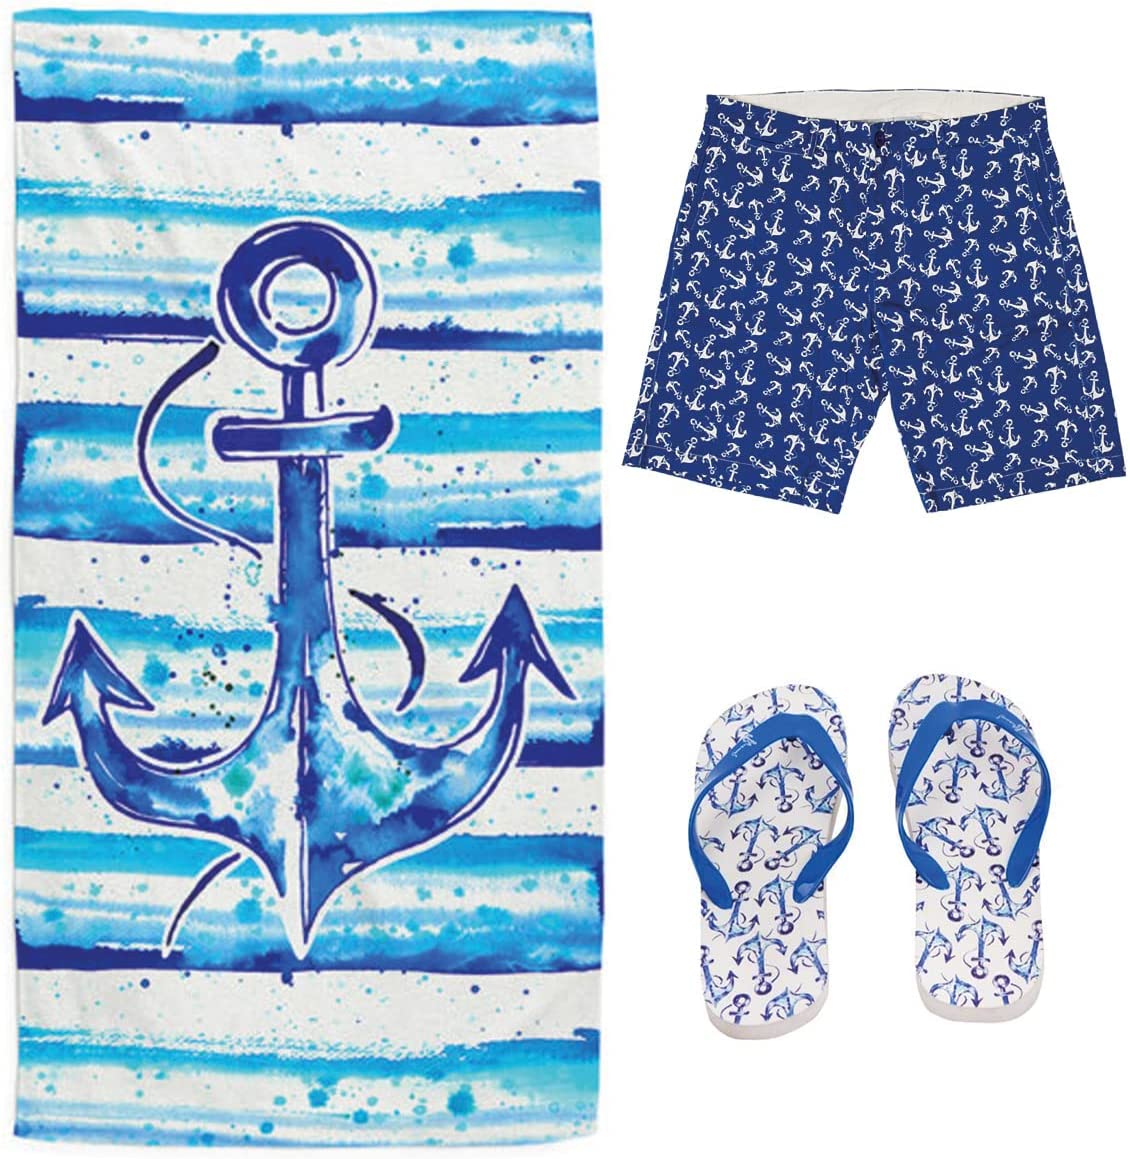 Anchor design beach towel   anchor design mid-rise medium shorts   anchor design 44-45 size flipflop